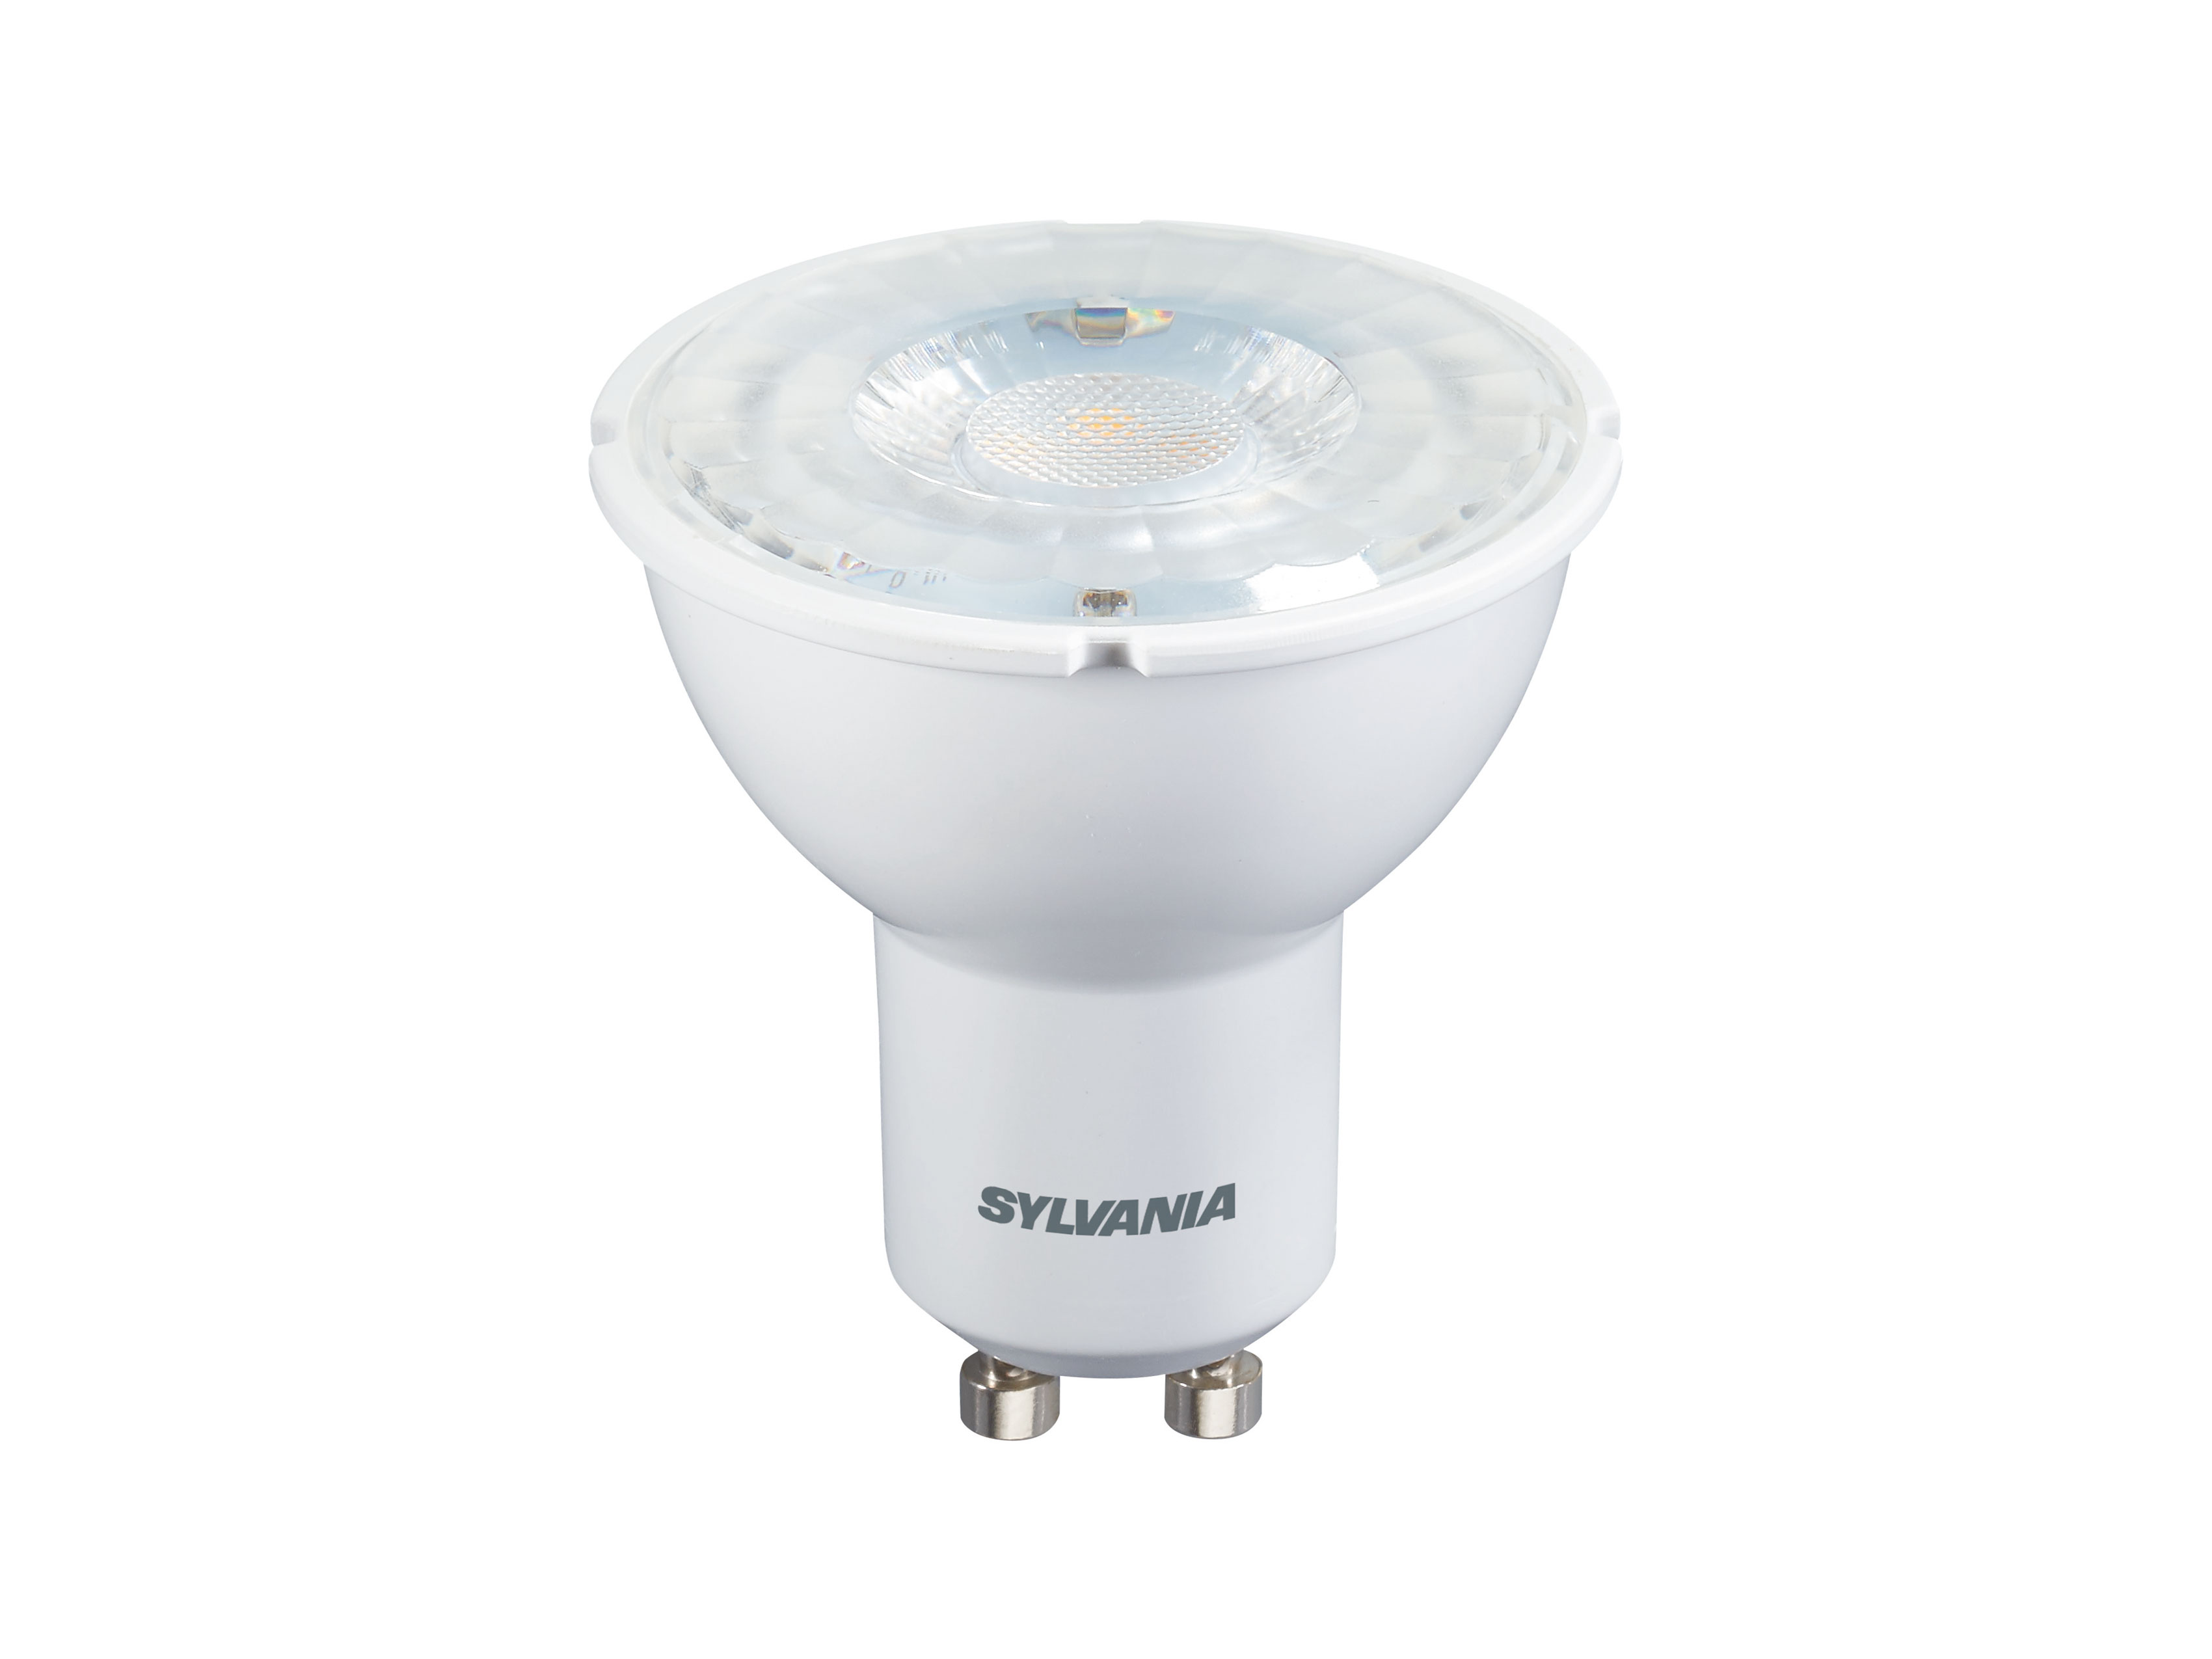 6x Sylvania RefLED ES50 V4 5W GU10 LED non-dimmable light bulb lamp 865 daylight 